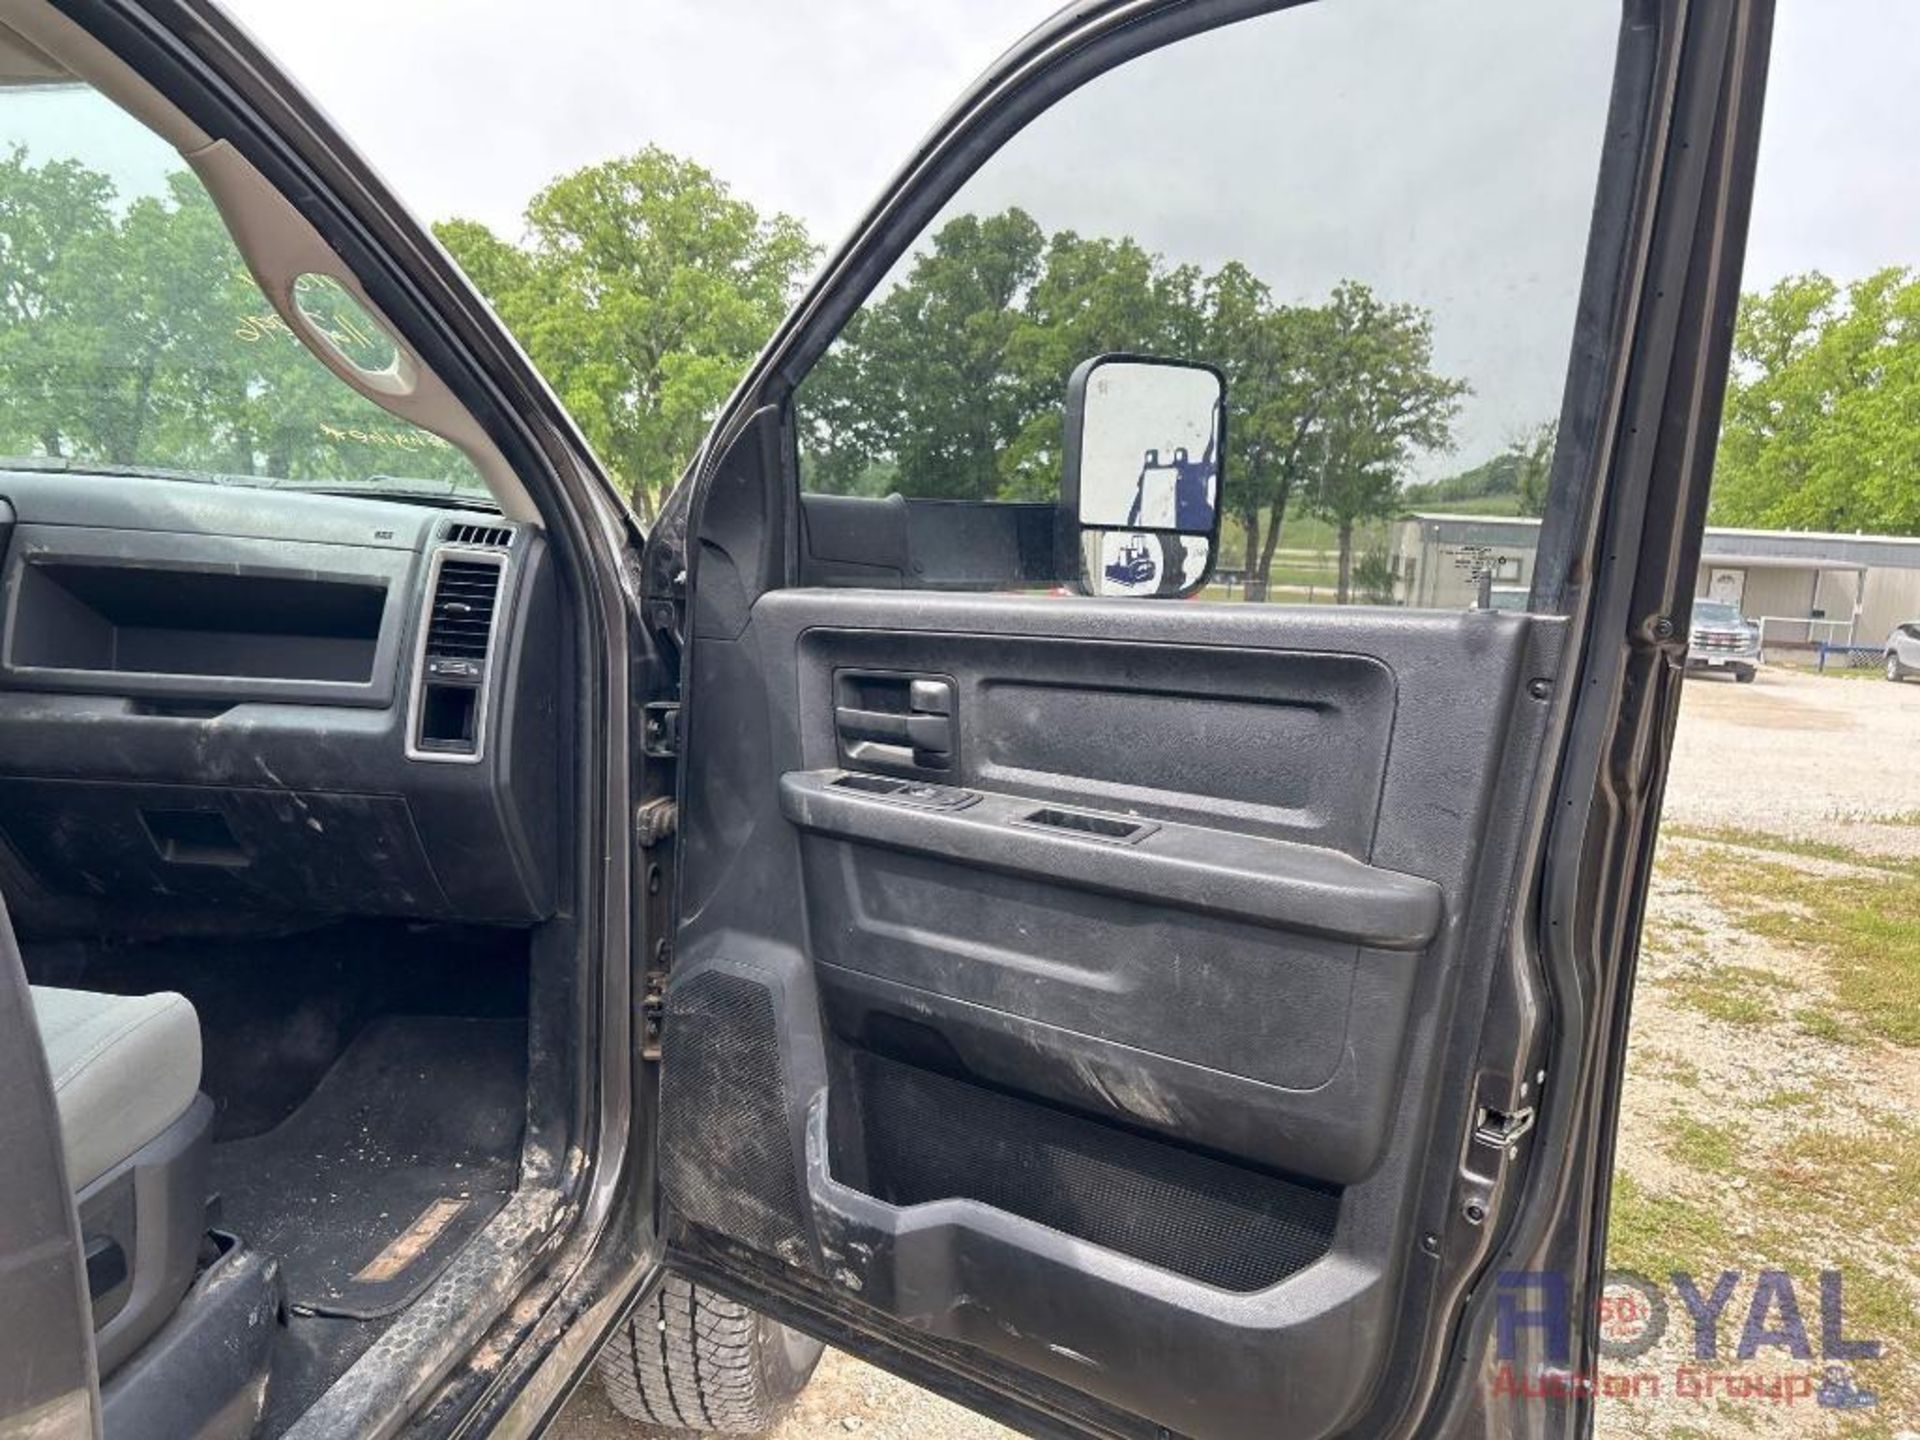 2018 Ram 2500HD 4x4 Crew Cab Pickup Truck - Image 28 of 37